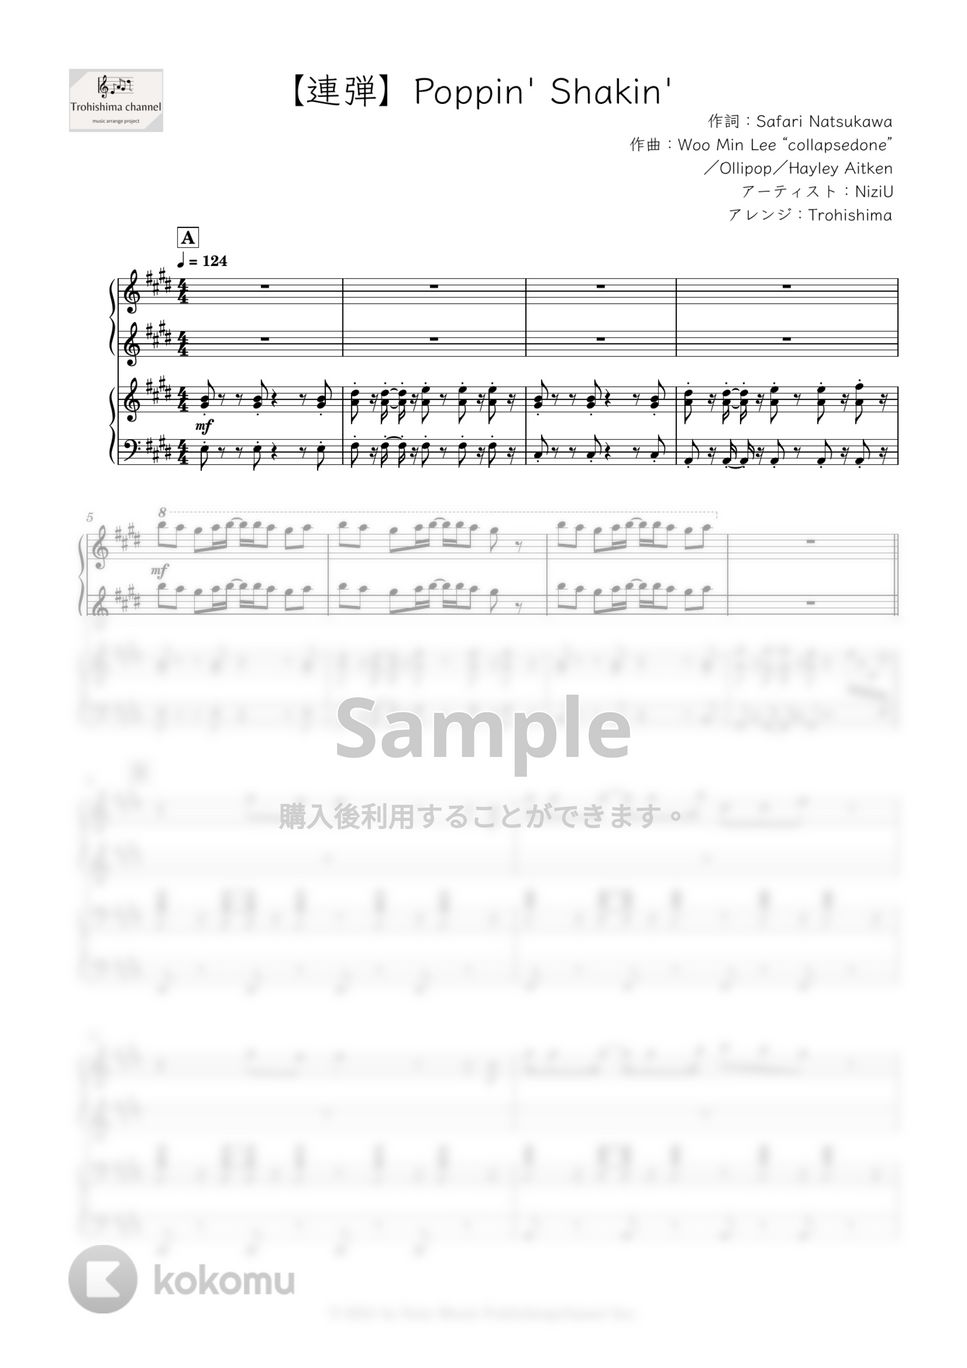 NiziU - Poppin' Shakin' (連弾 / ソフトバンク「NiziU LAB」CMソング) by Trohishima